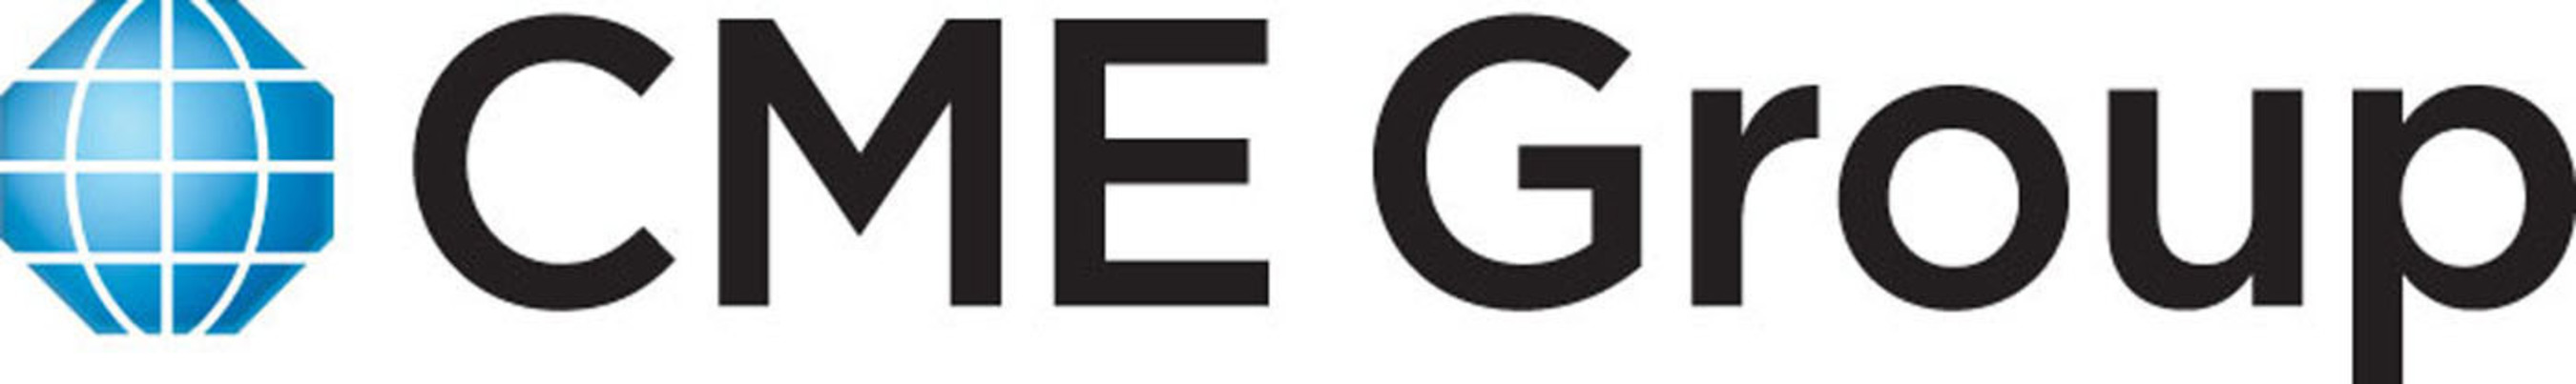 Cme Group Logo 20